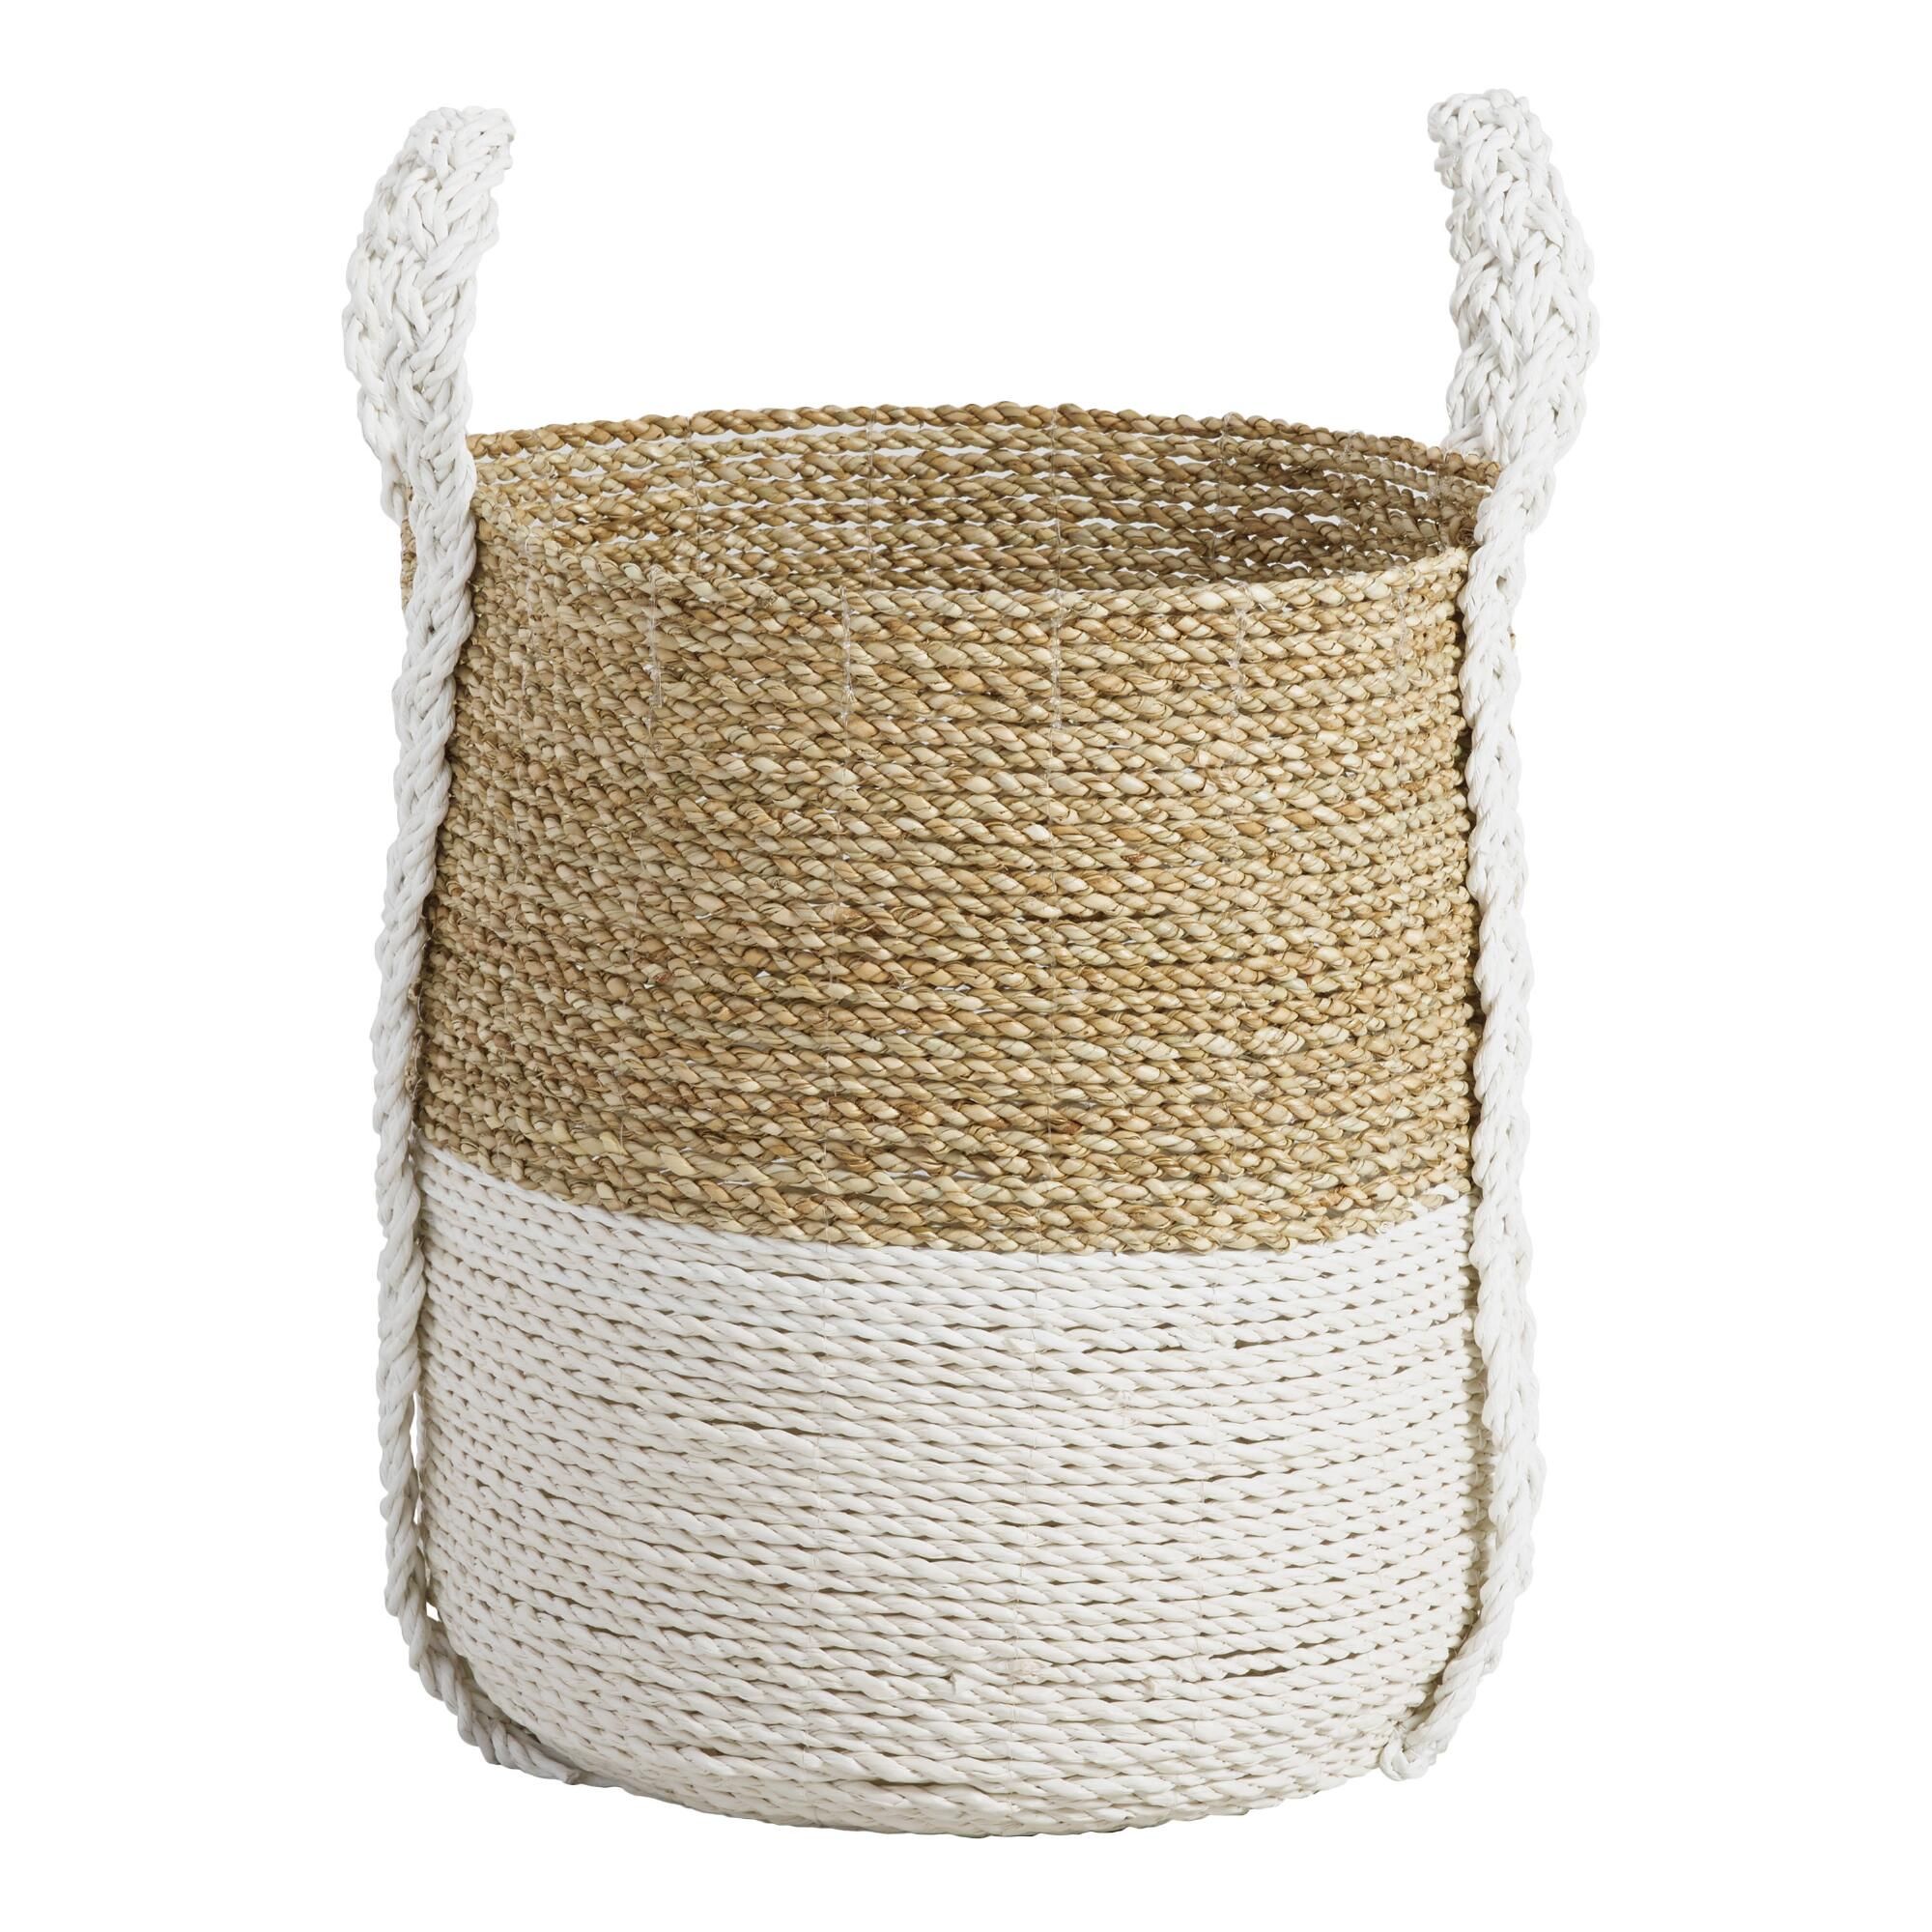 Medium Two Tone Seagrass Bianca Tote Basket: White - Natural Fiber by World Market | World Market